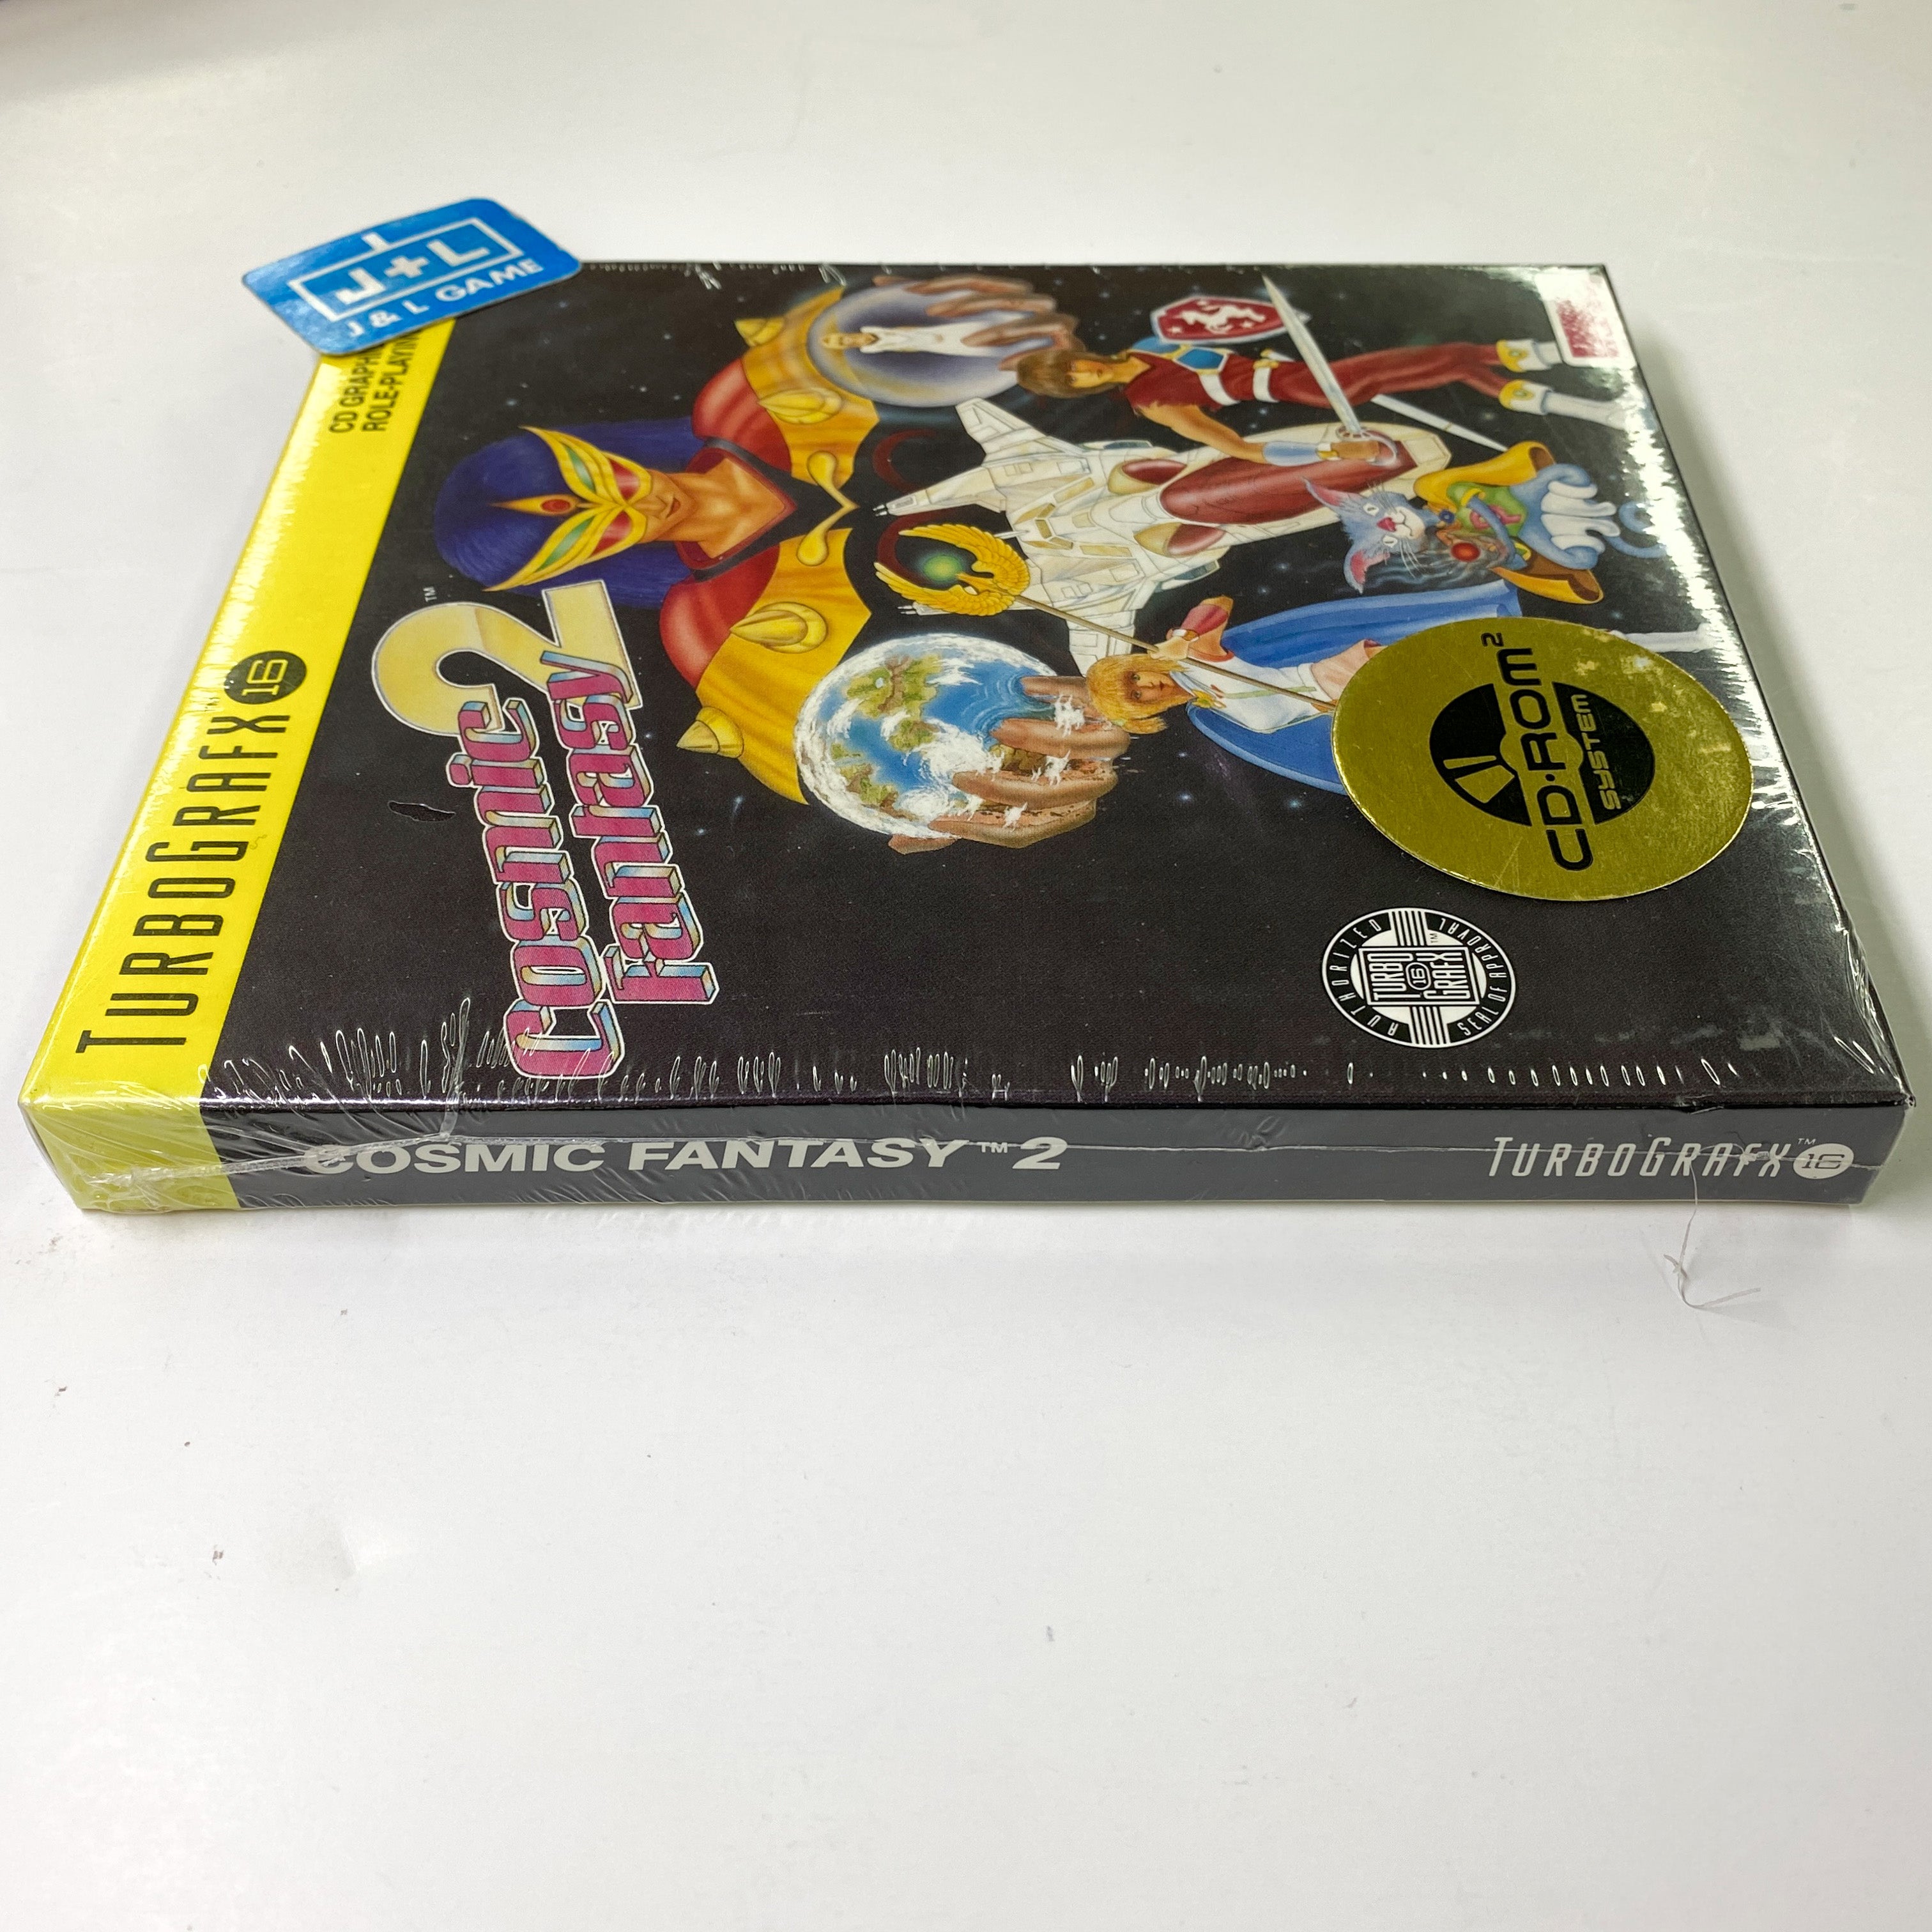 Cosmic Fantasy 2 - Turbo CD Video Games Working Designs   